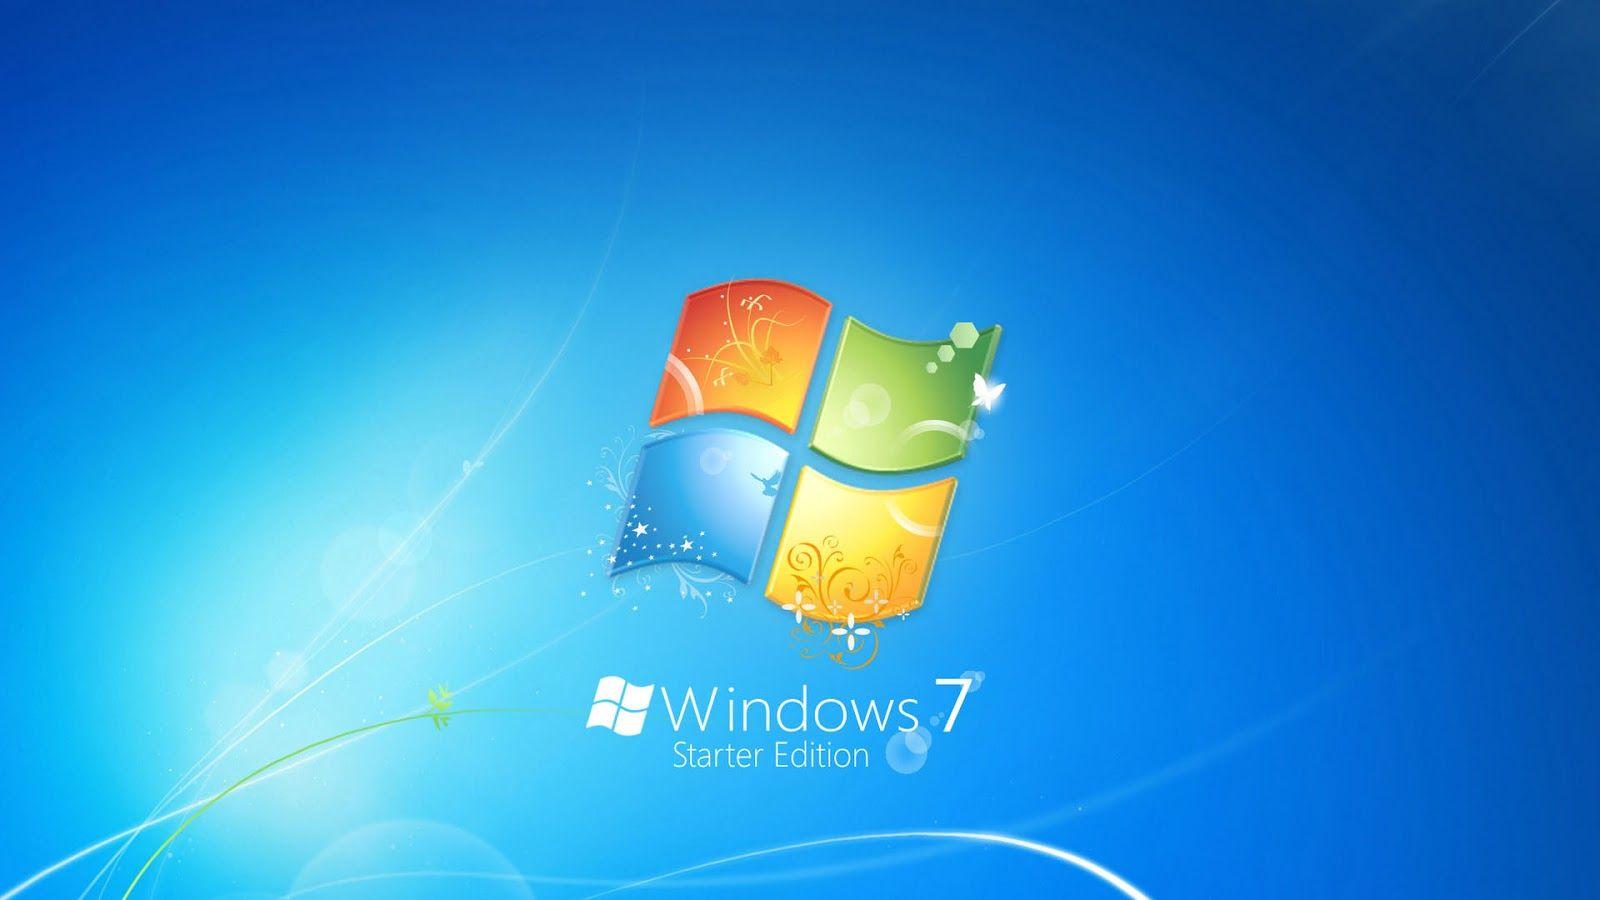 Windows 7 HD Wallpaper 1080pTop Wallpaper. Download the top